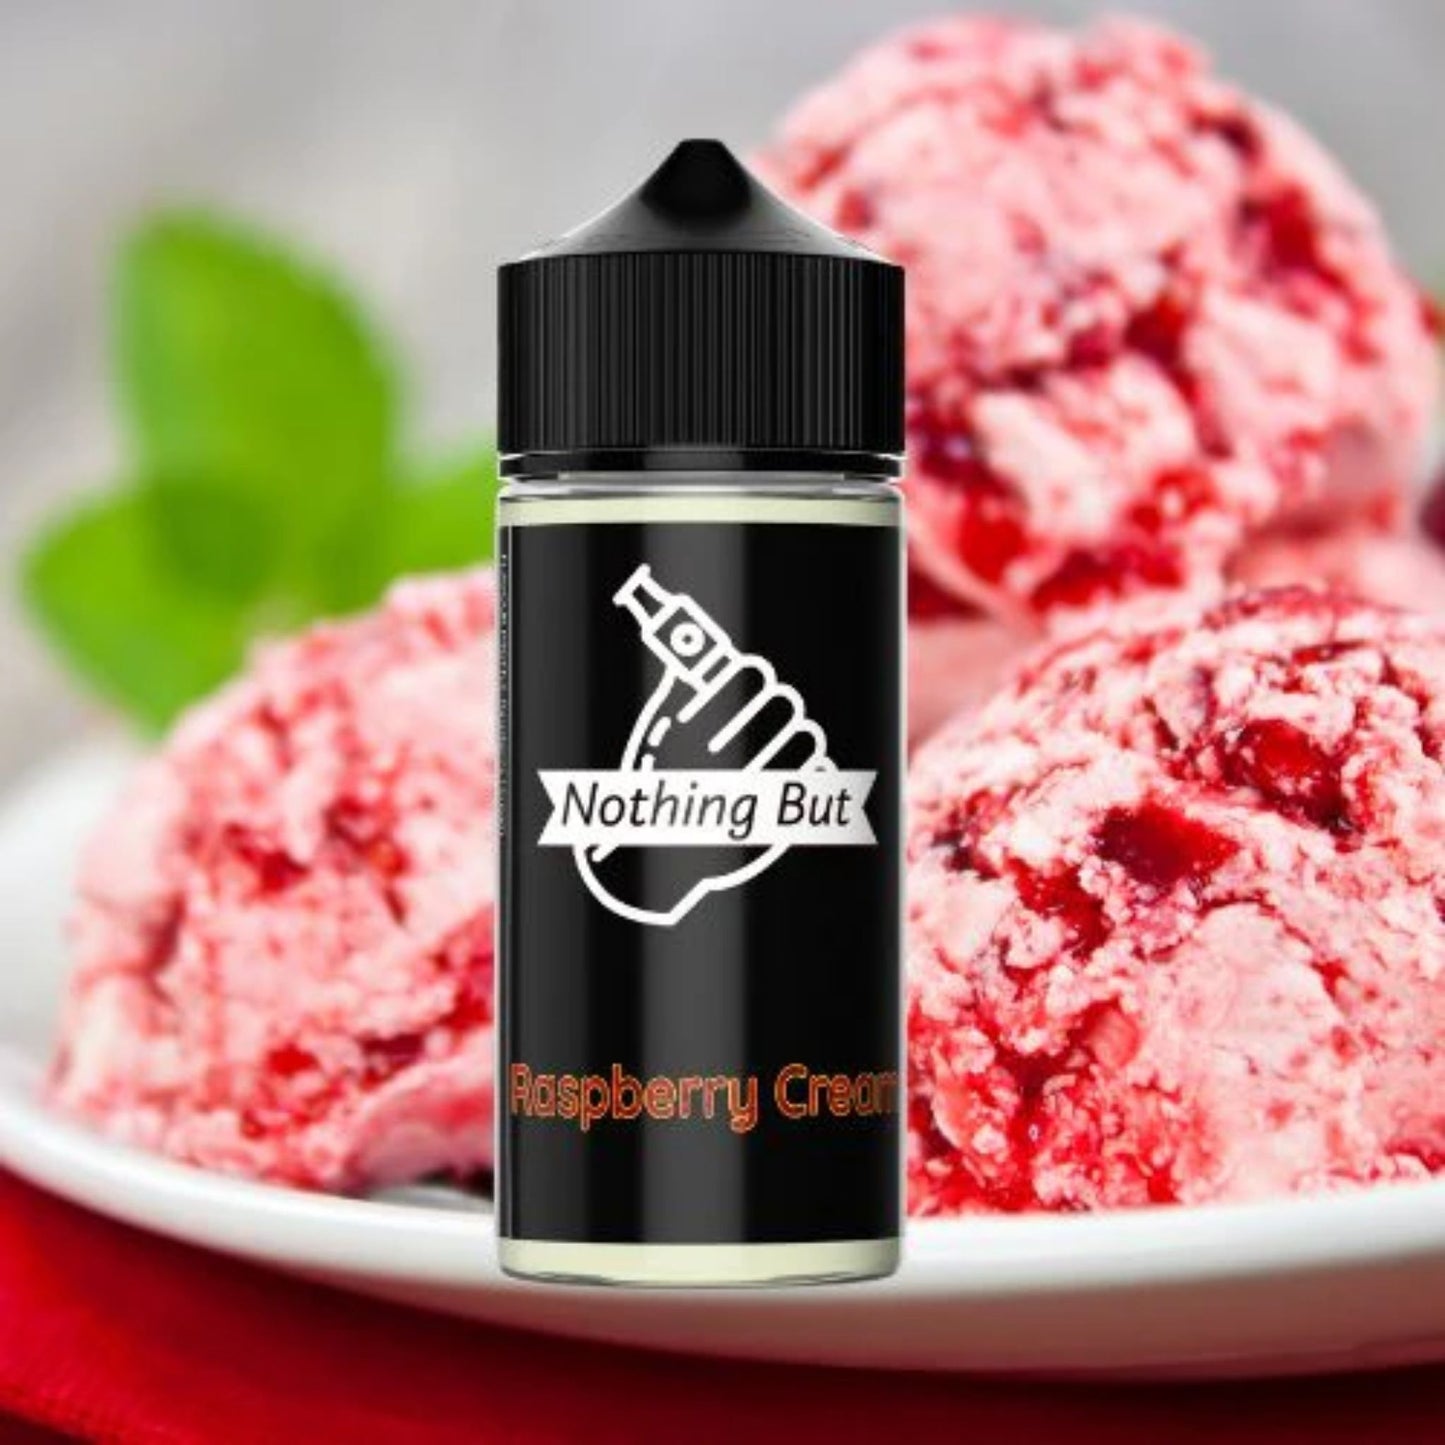 Nothing But | Raspberry Cream | 120ml bottle with raspberry ice cream background